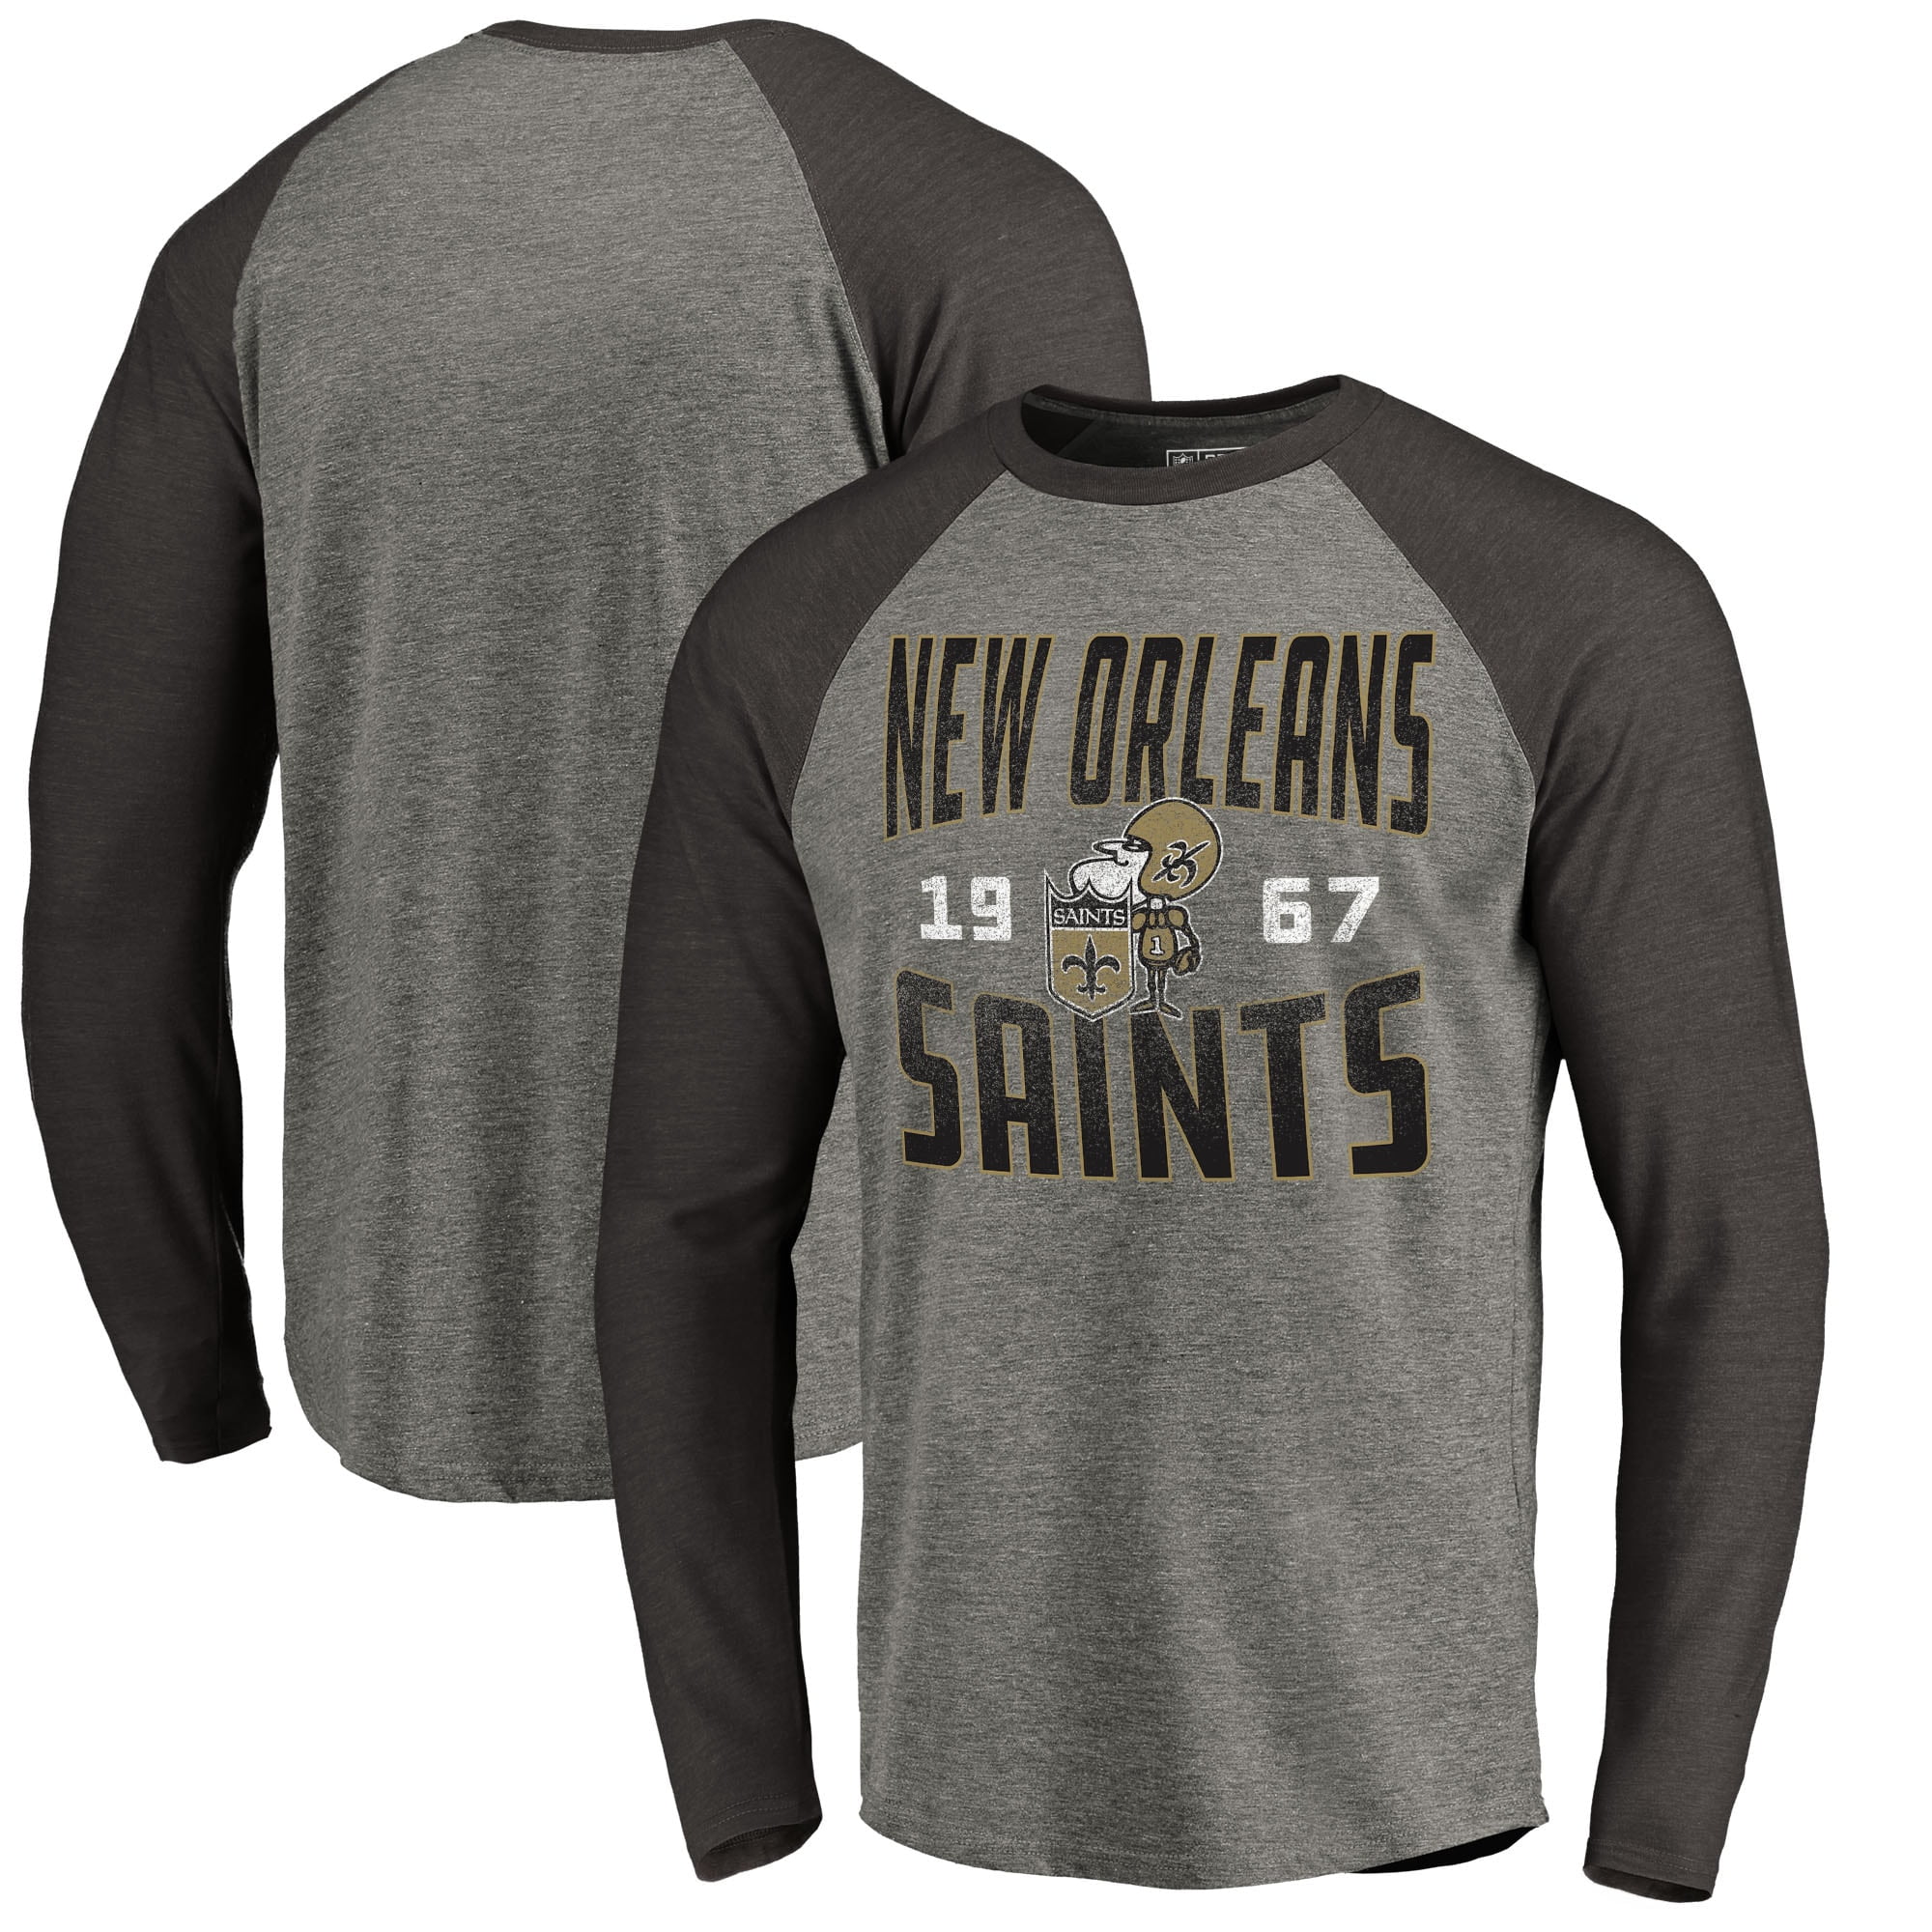 الوان طعام بودره Men's NFL Pro Line by Fanatics Branded Ash New Orleans Saints ... الوان طعام بودره